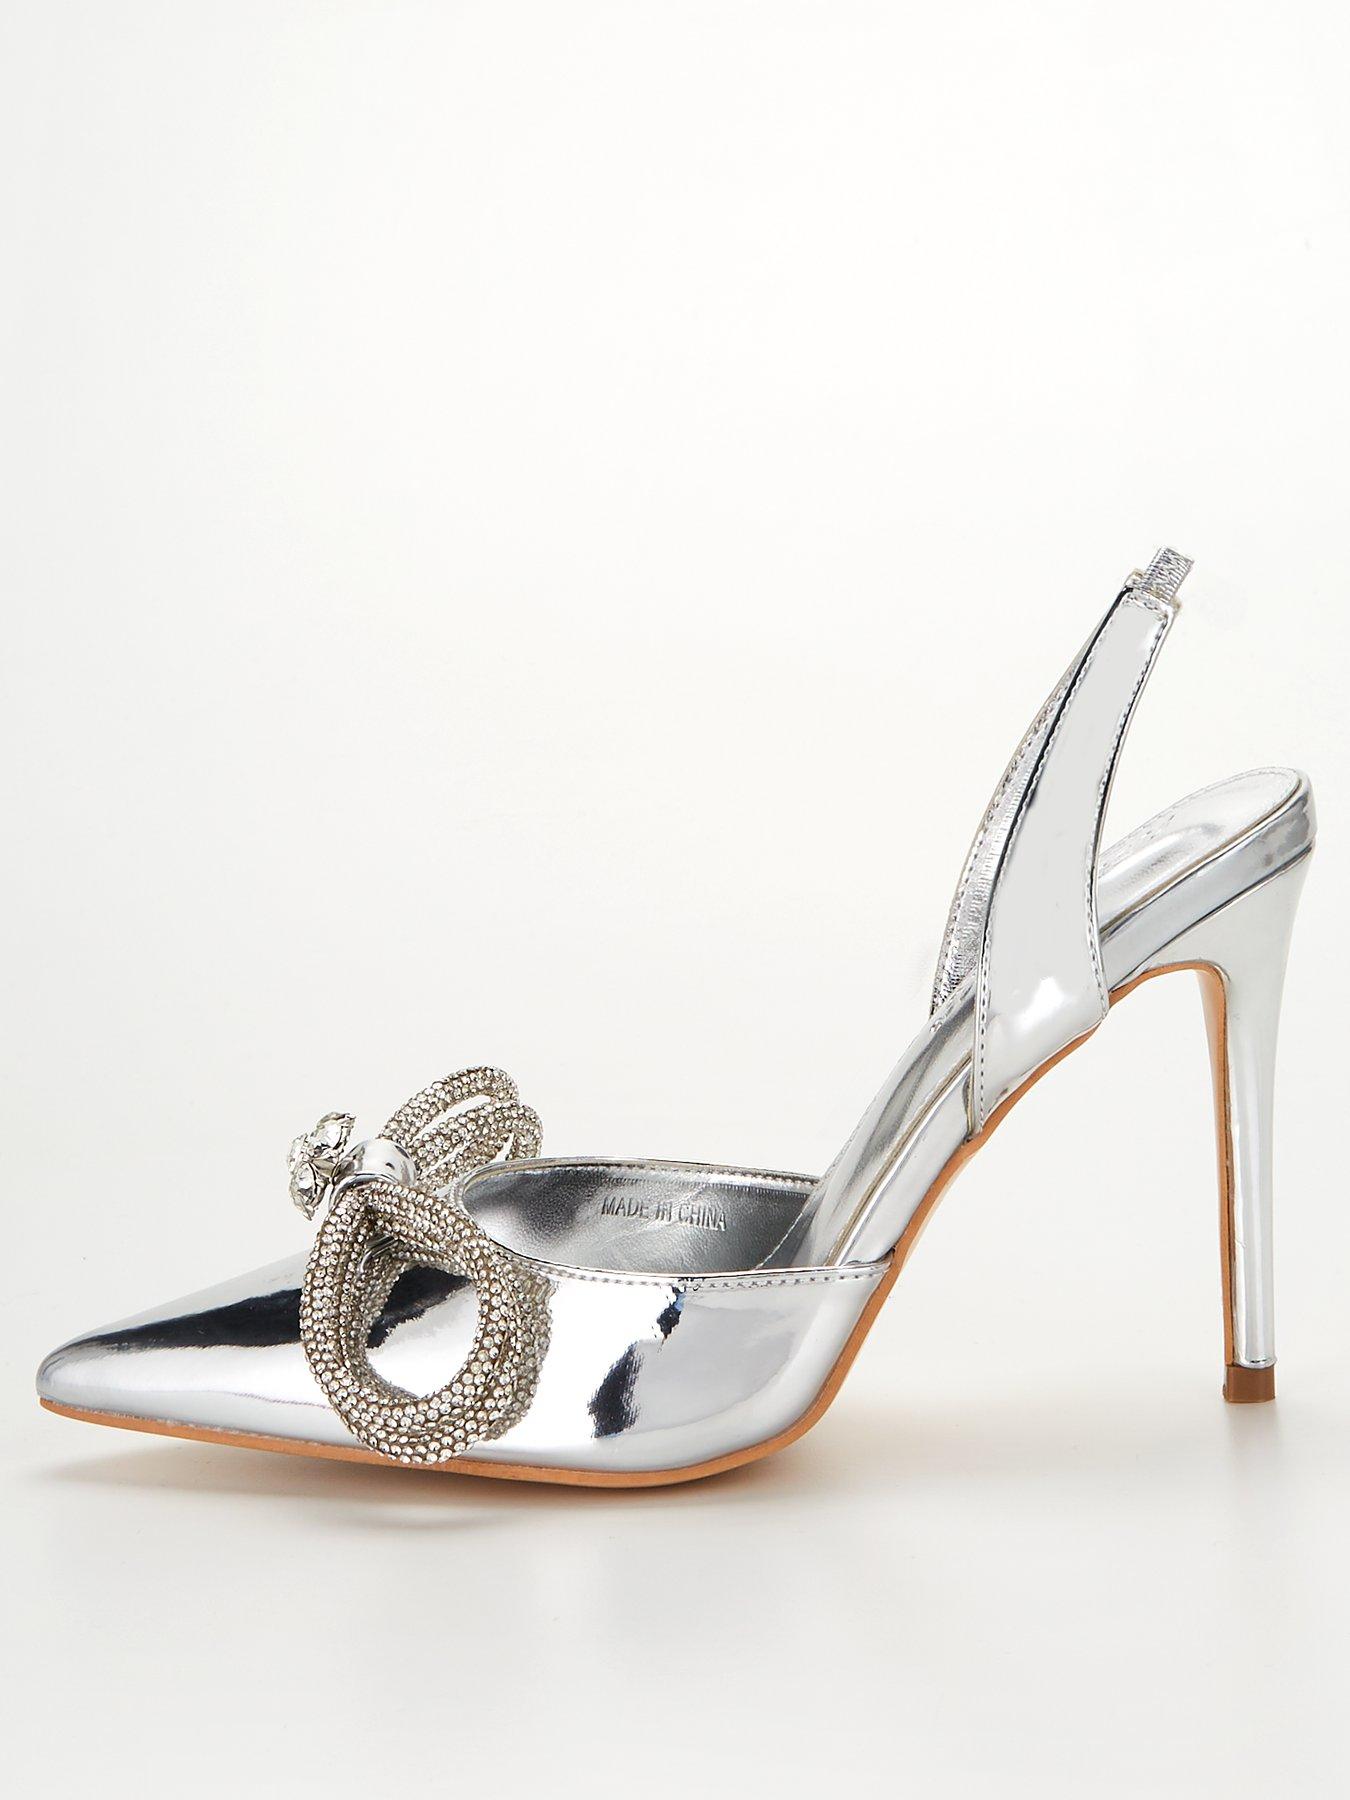 Qupid Nadine @ Amazon.com | Pumps heels, High heel pumps, Womens fashion  shoes